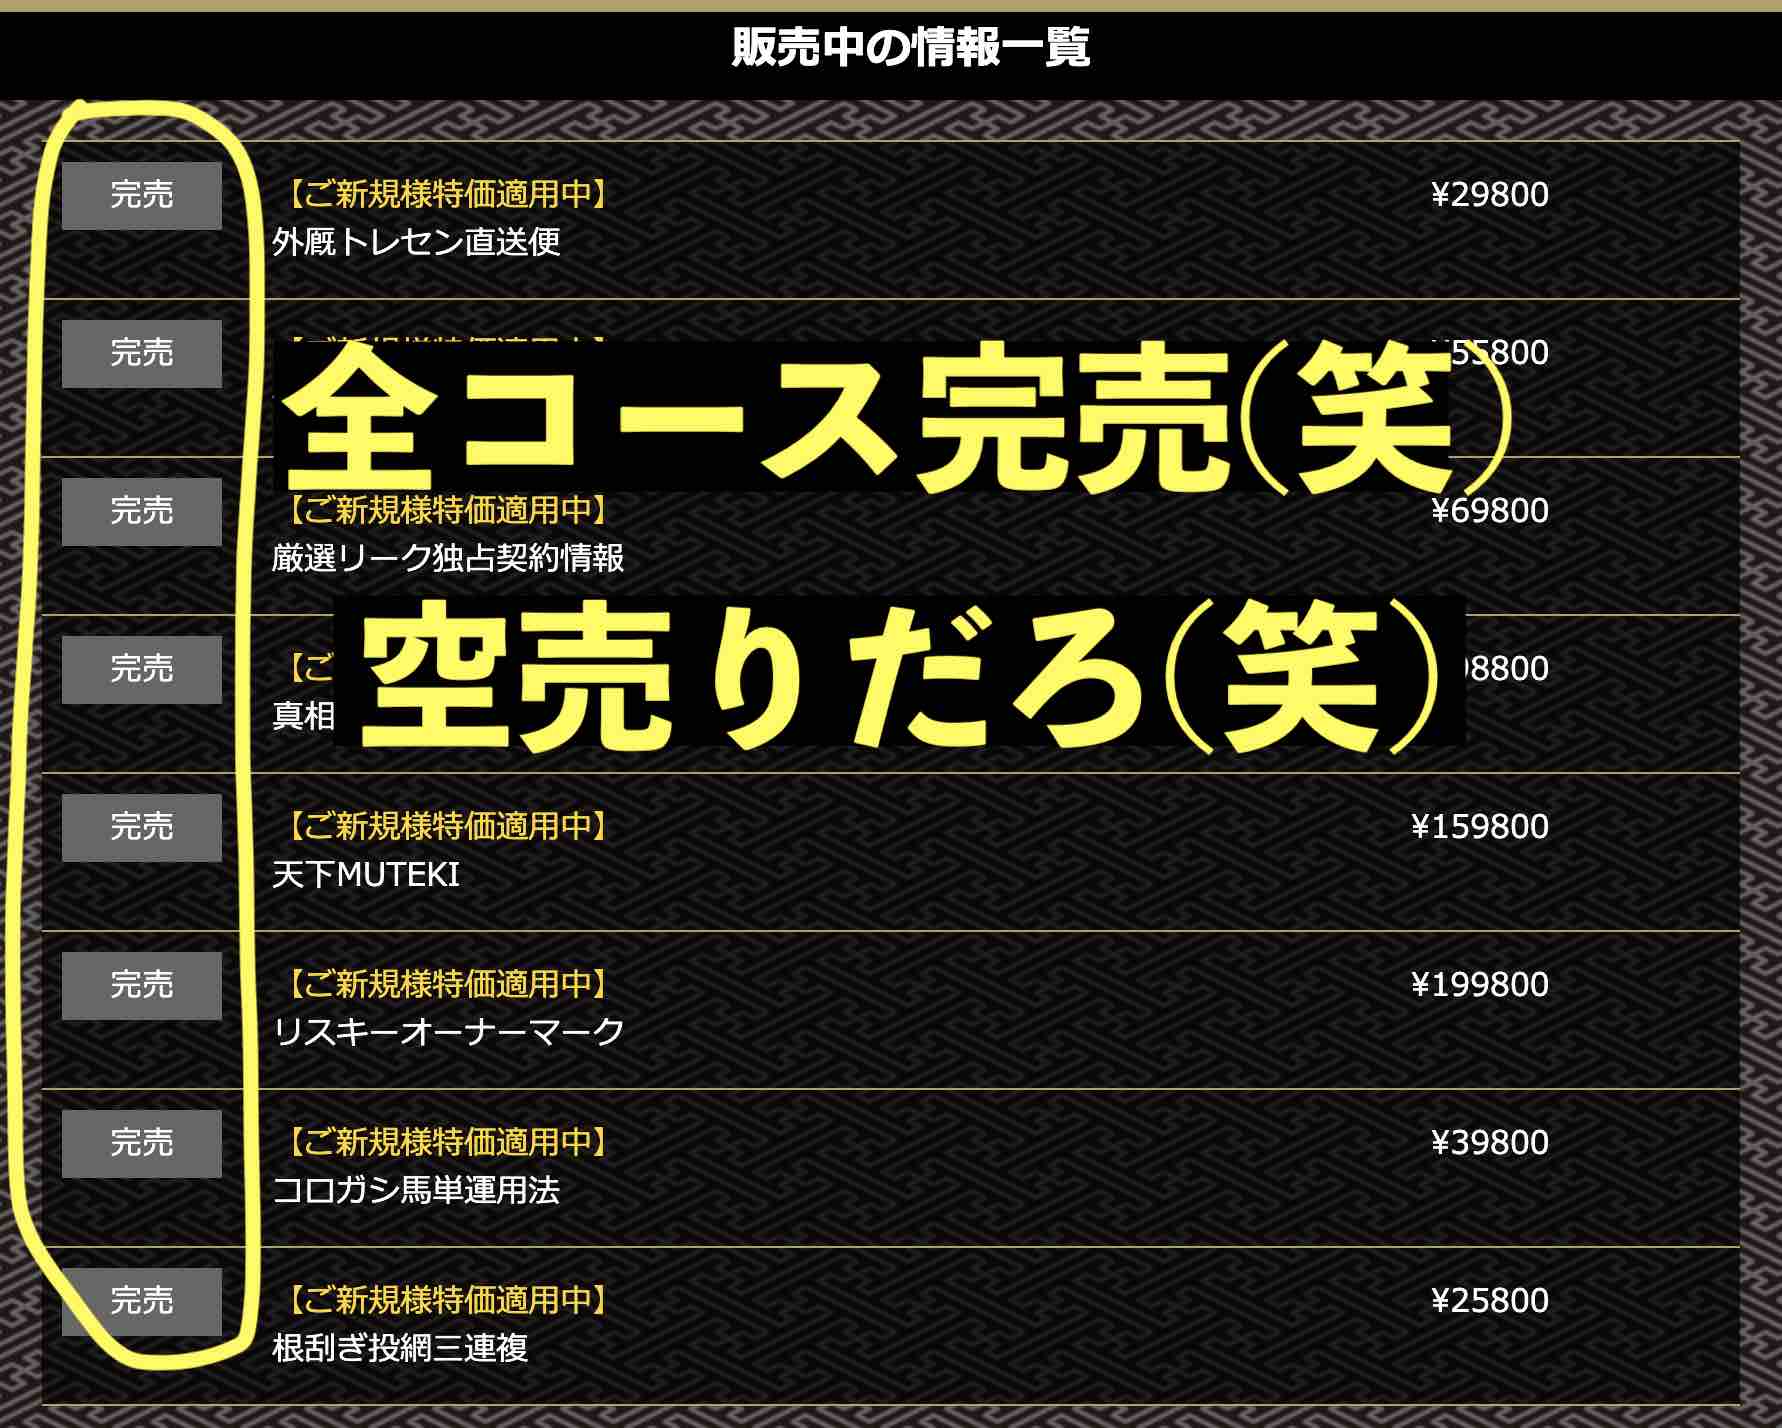 MUTEKIという競馬予想サイトは空売りをして的中を捏造しているようだ